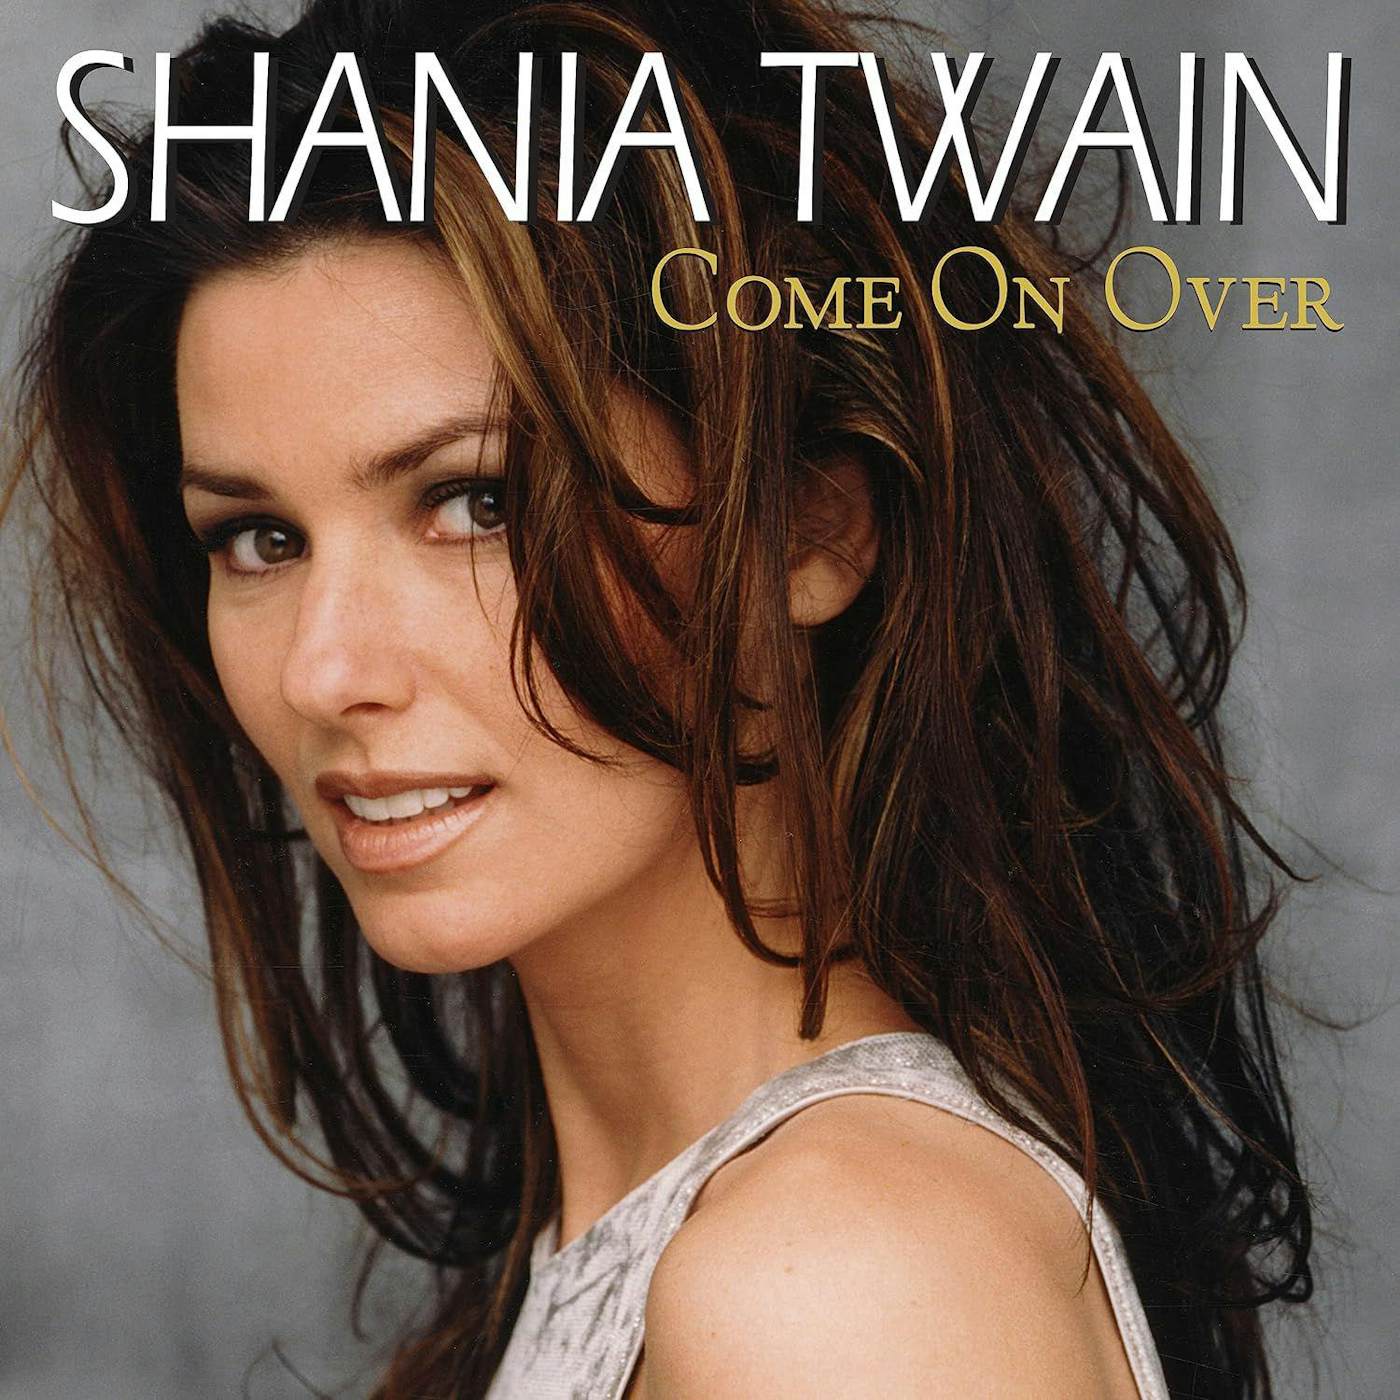 Shania Twain Come On Over (International) (2LP) Vinyl Record